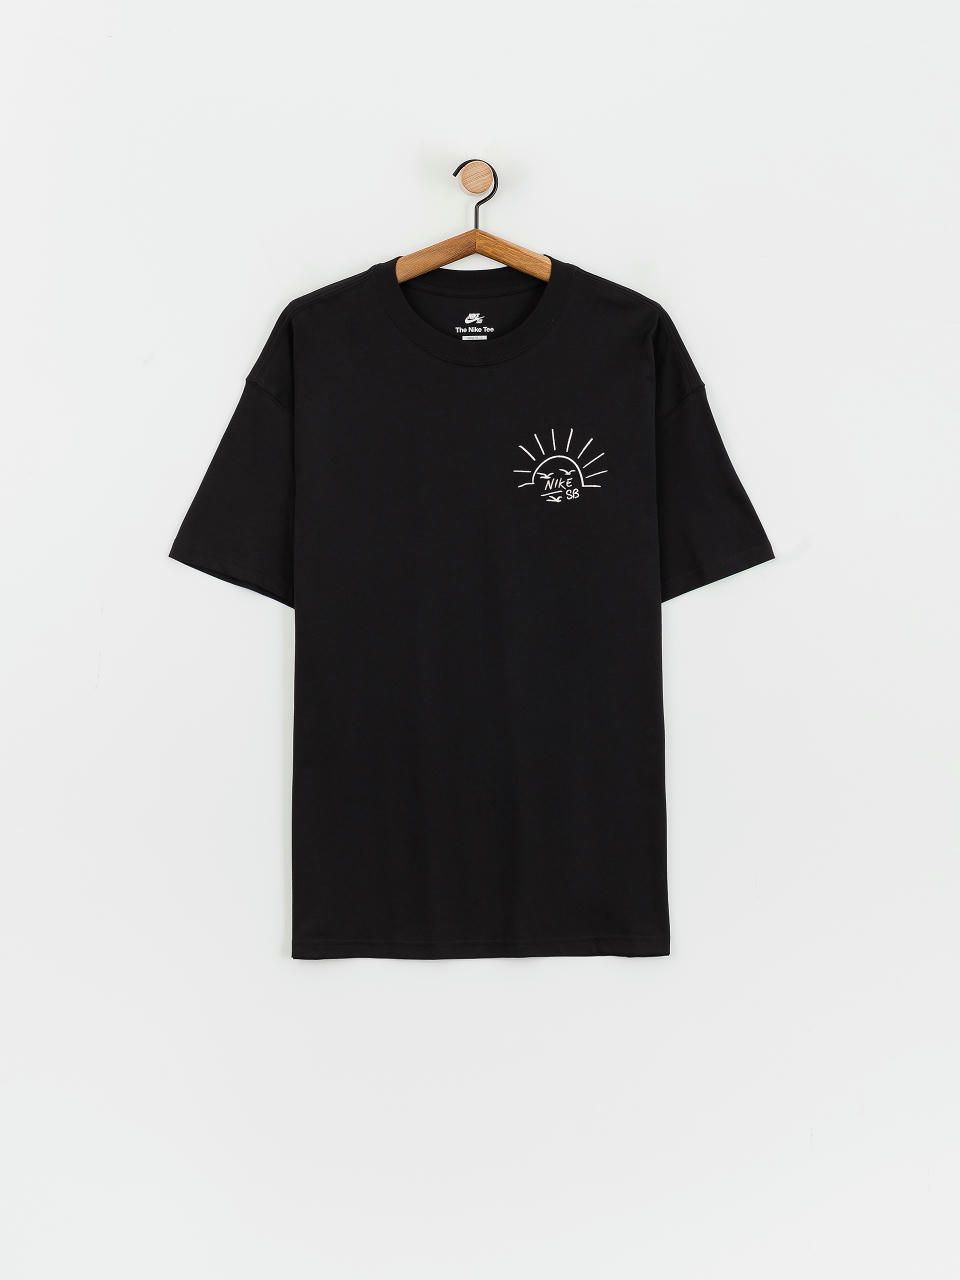 T-shirt Nike SB M90 Train Moniker (black)